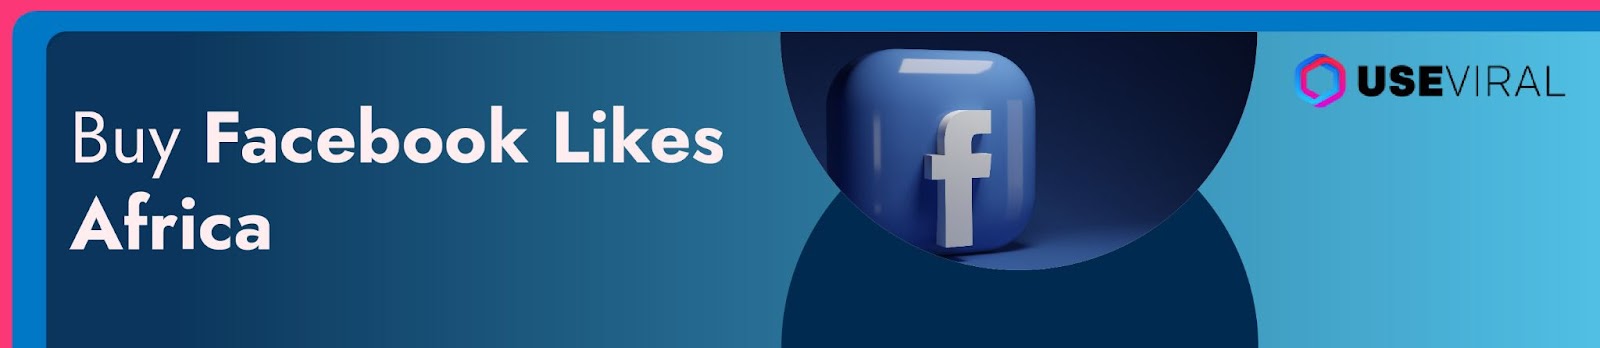 Buy Facebook Likes Africa